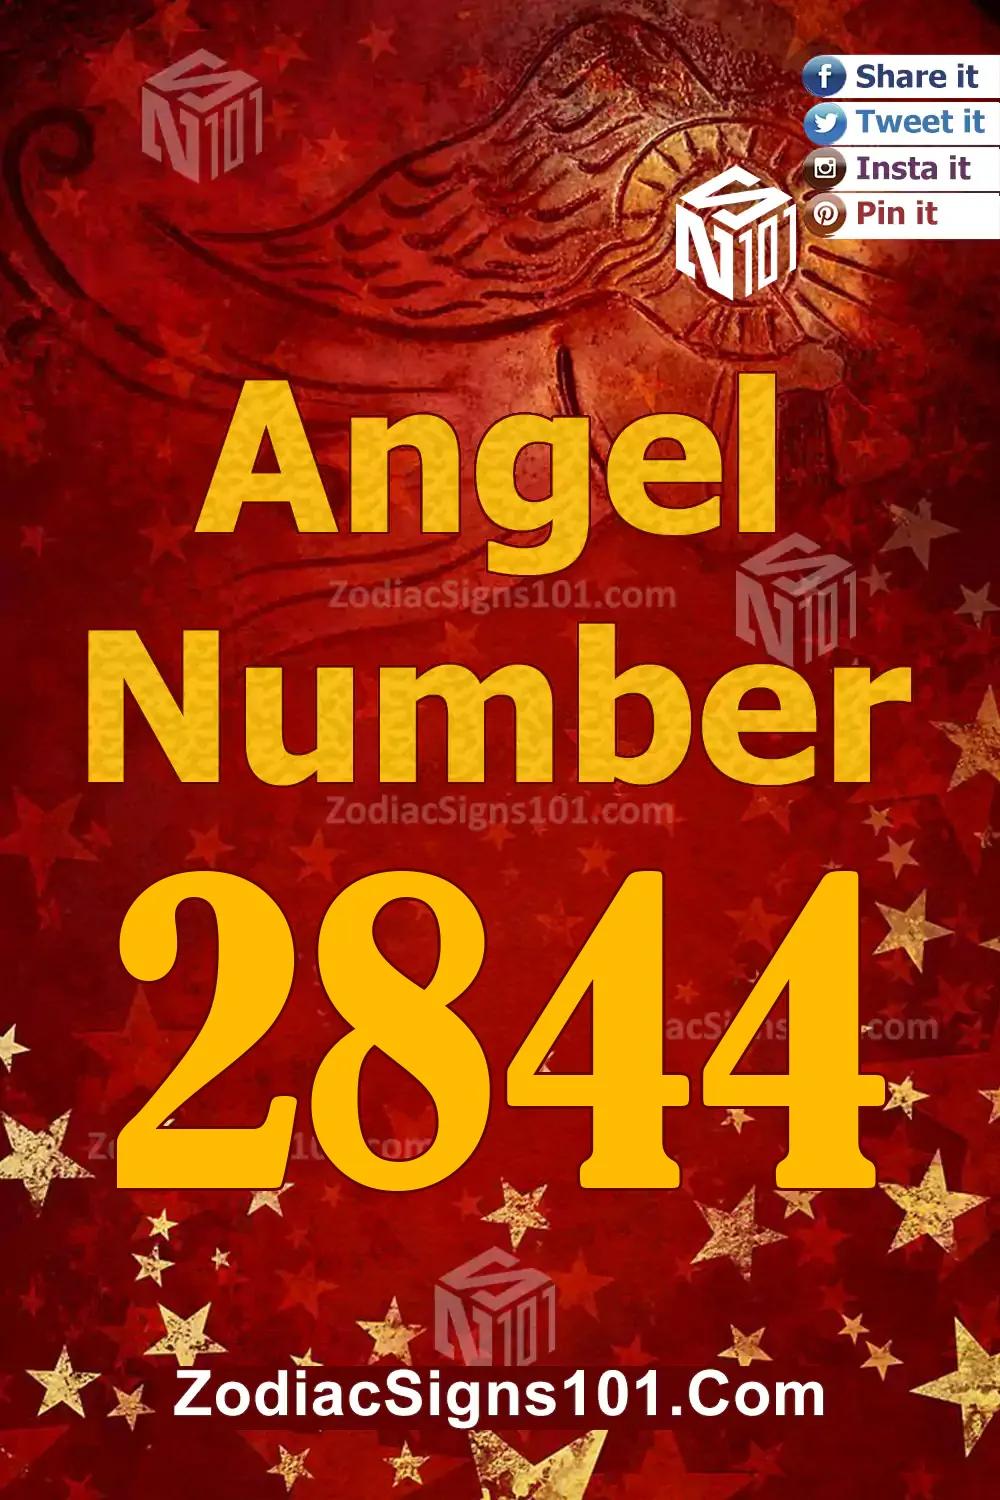 2844-Angel-Number-Meaning.jpg